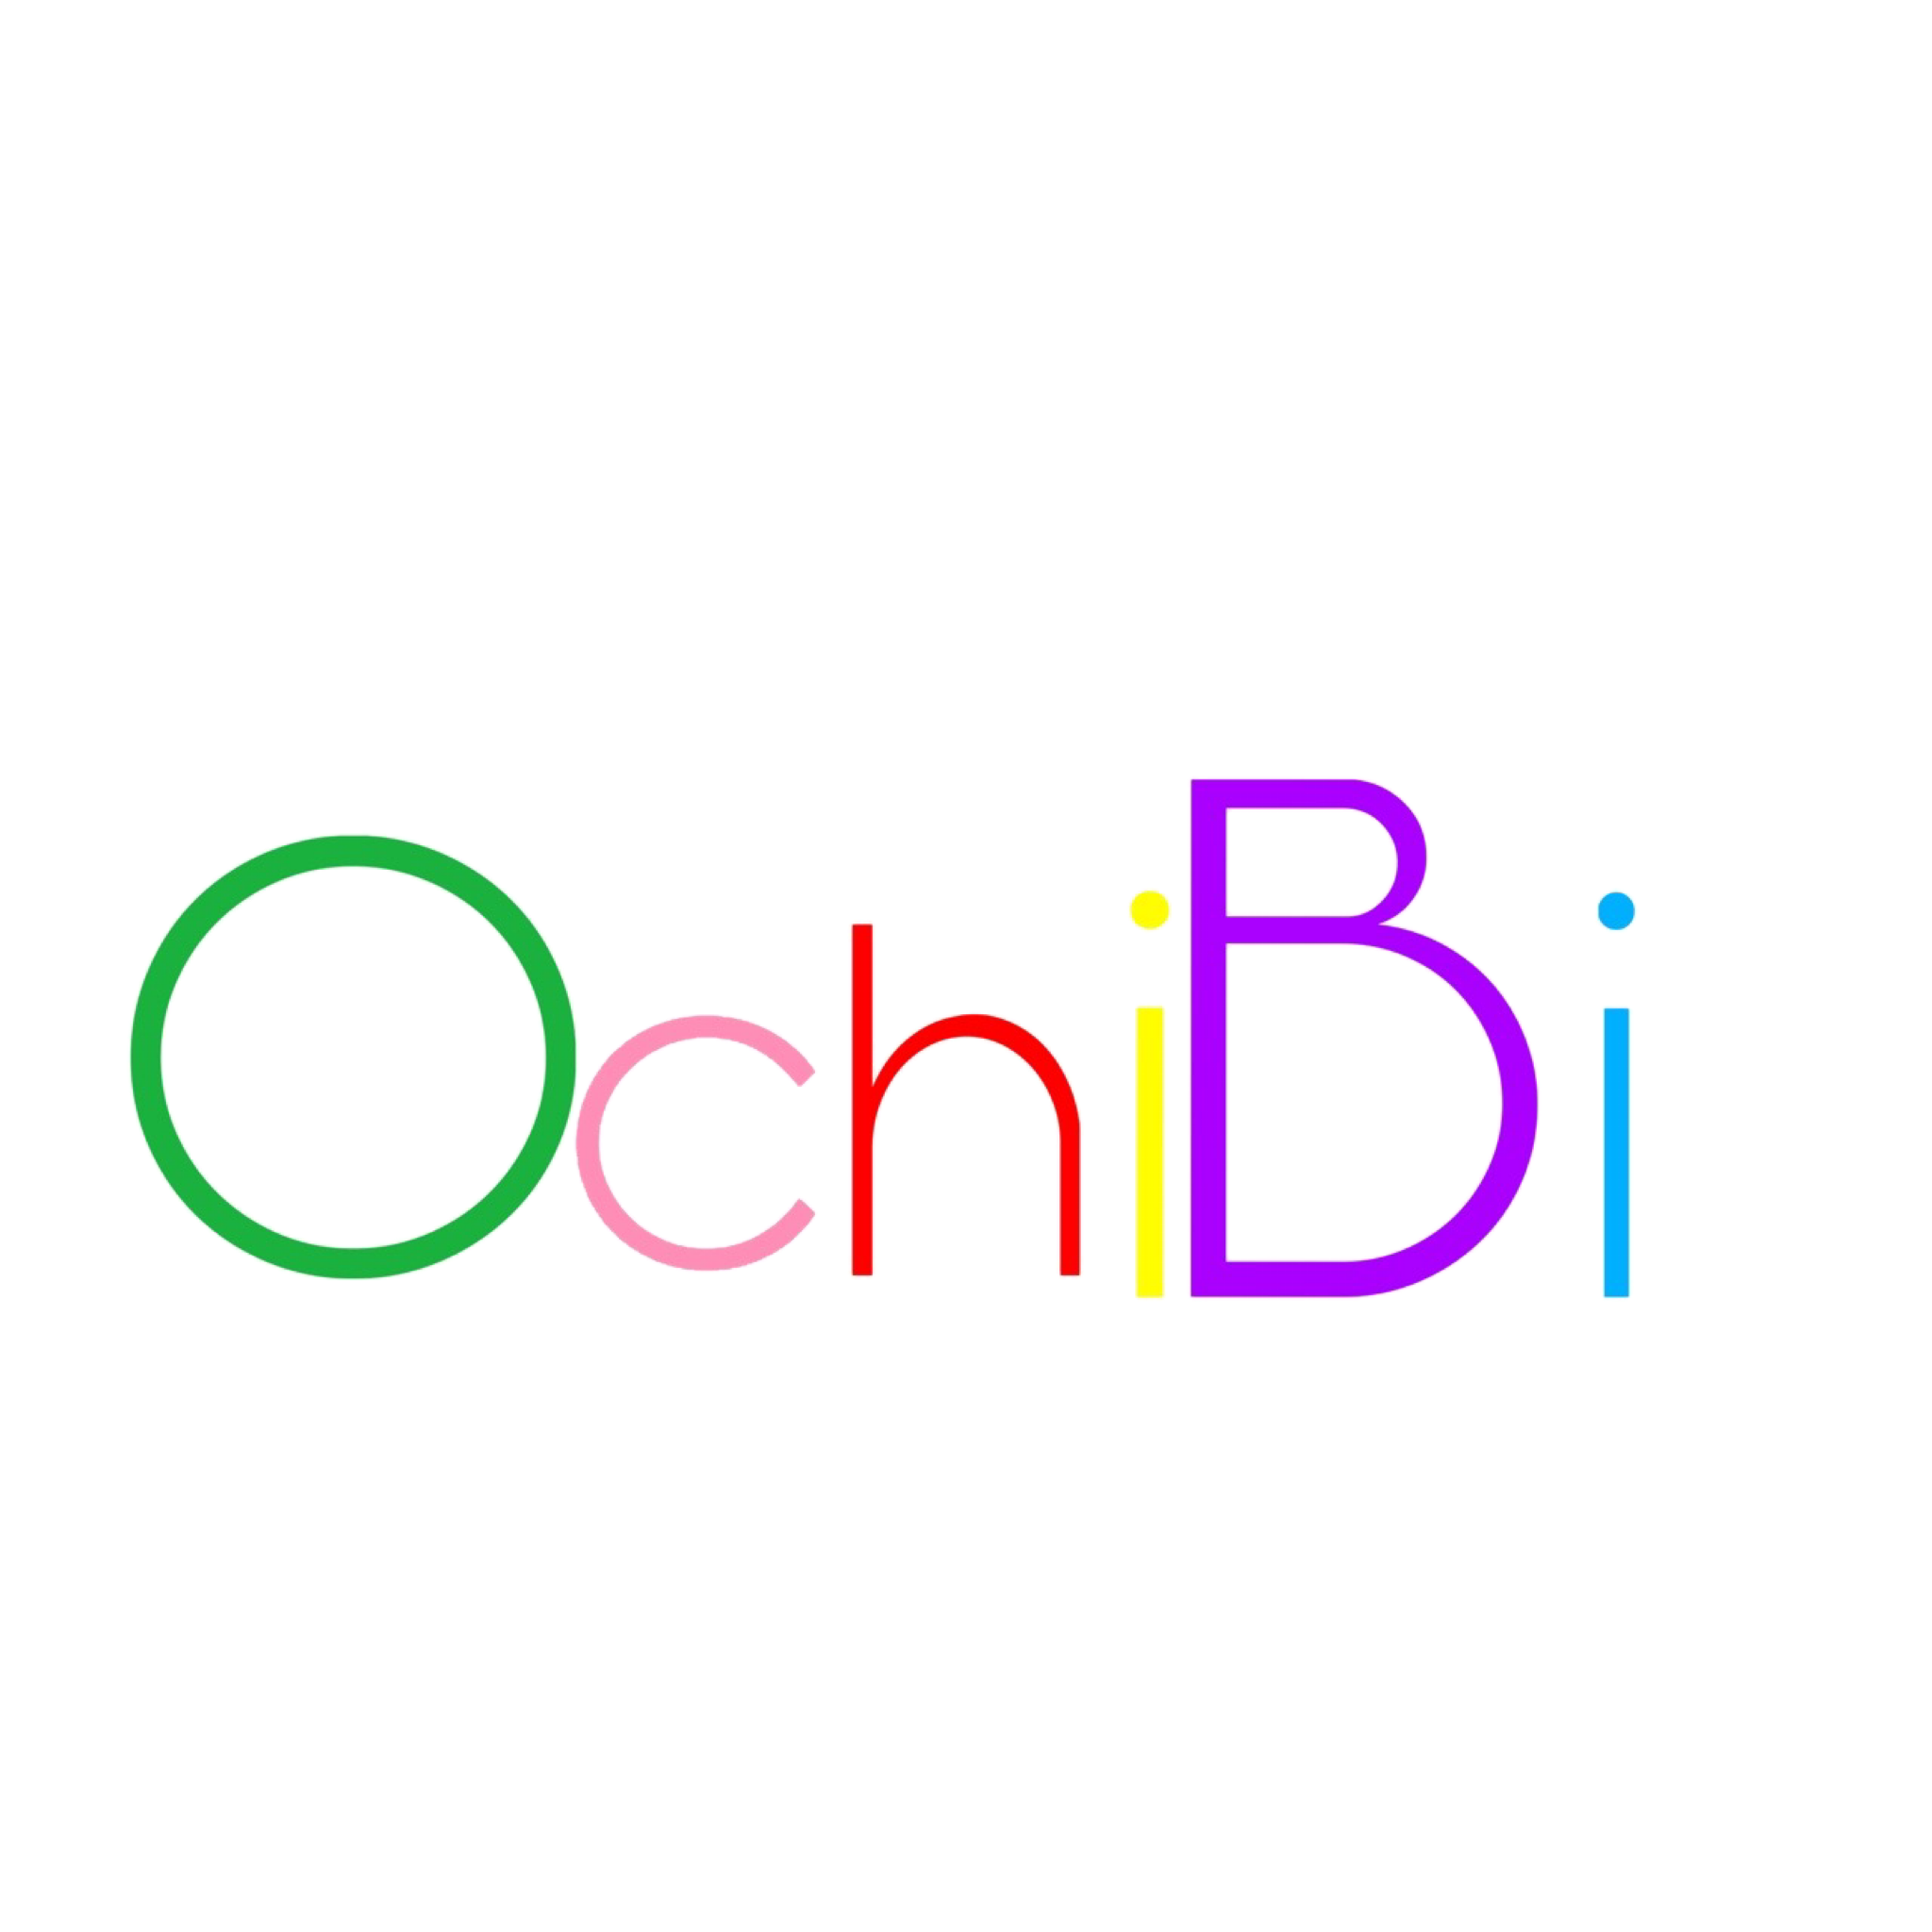 OchiBi